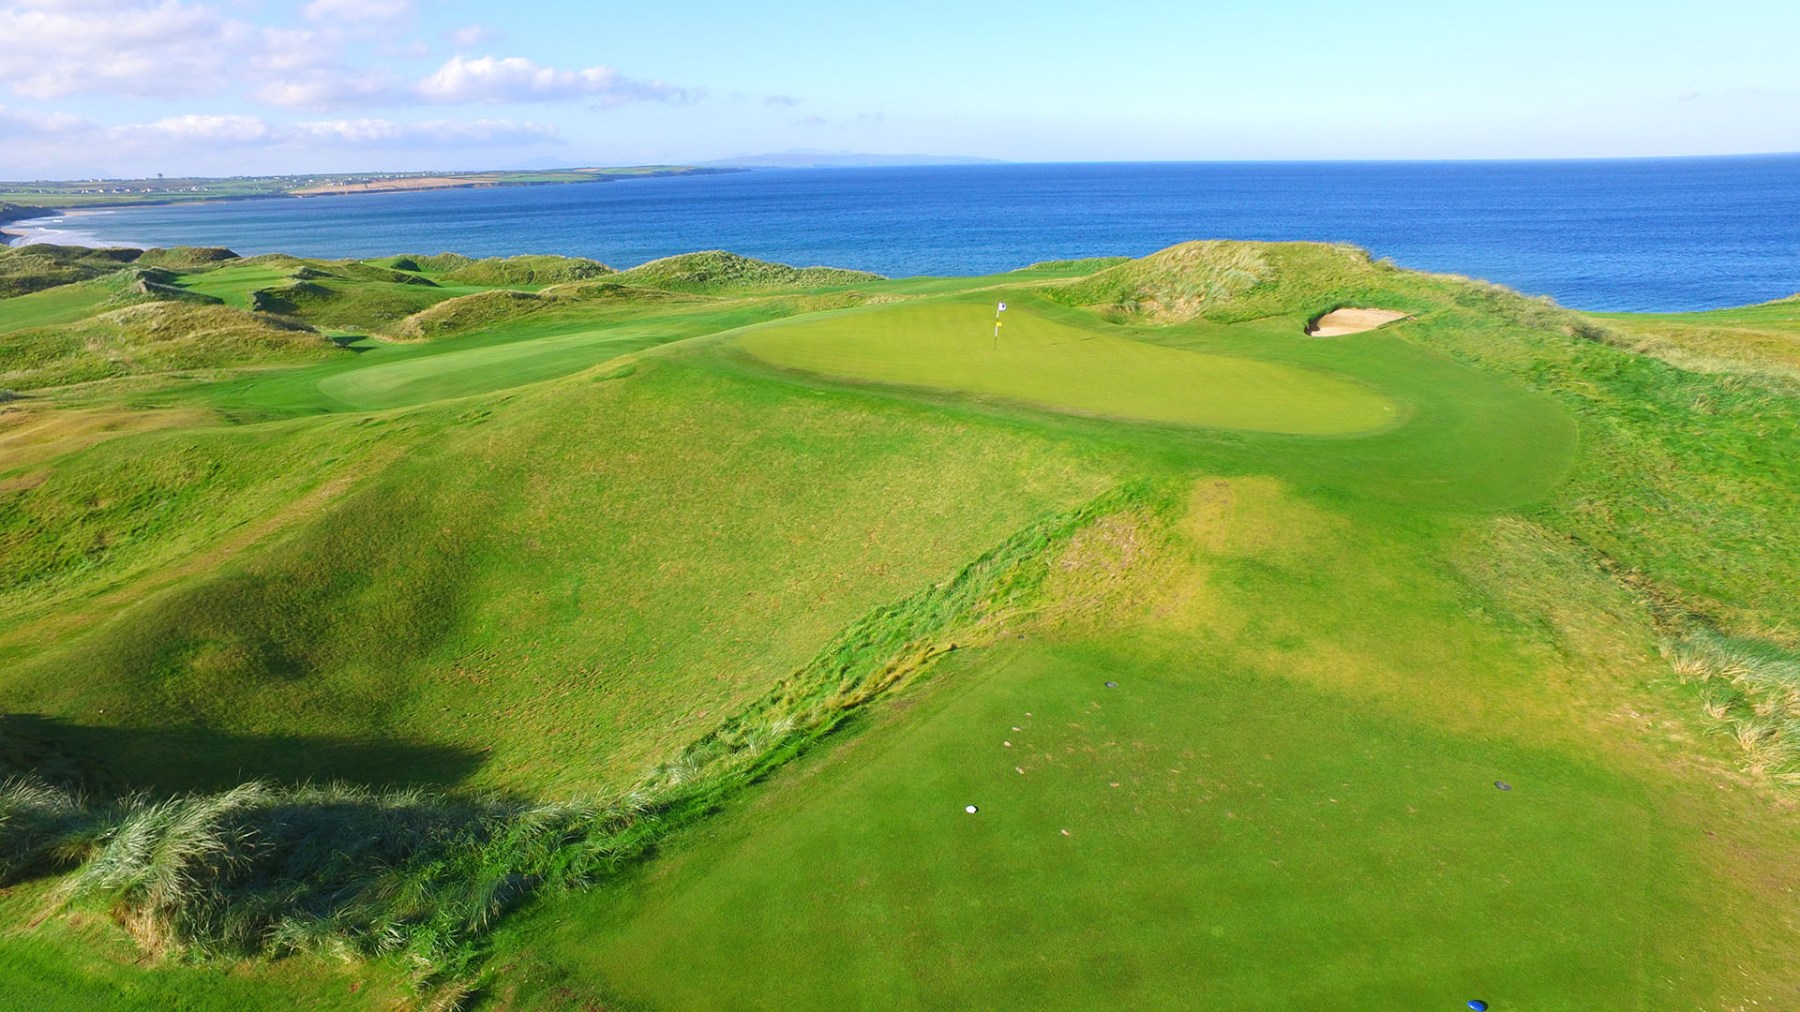 Golf course near a lake in southwest Ireland